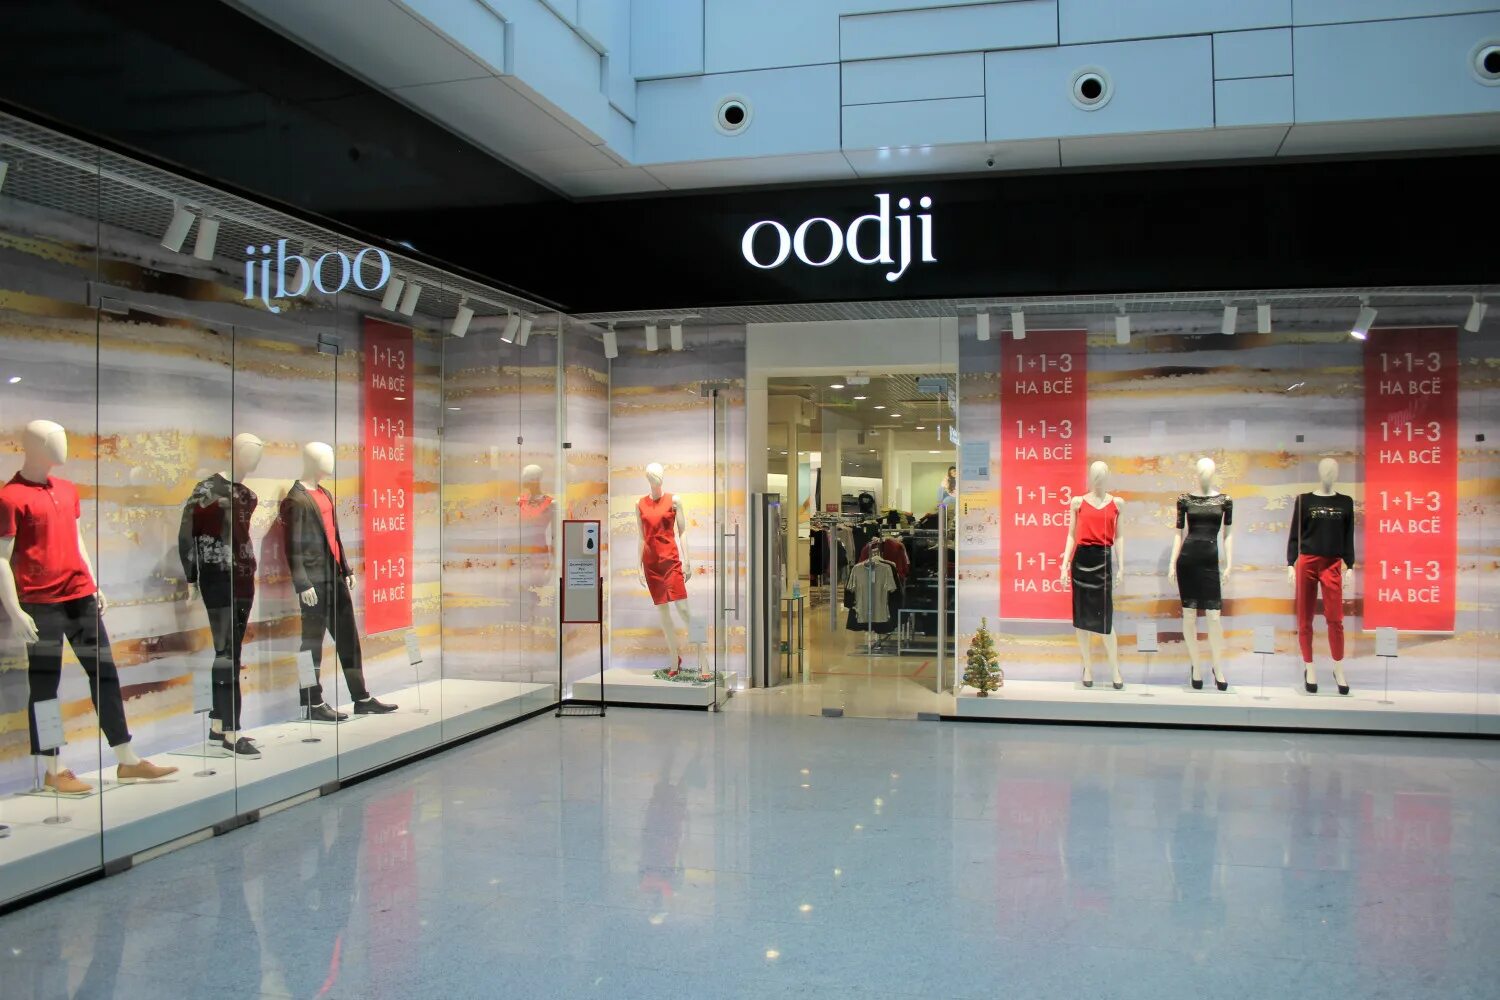 Магазин oodji. Оджи в СПБ. Oodji магазины на карте. Oodji магазины в Москве. Сайт интернет магазинов oodji